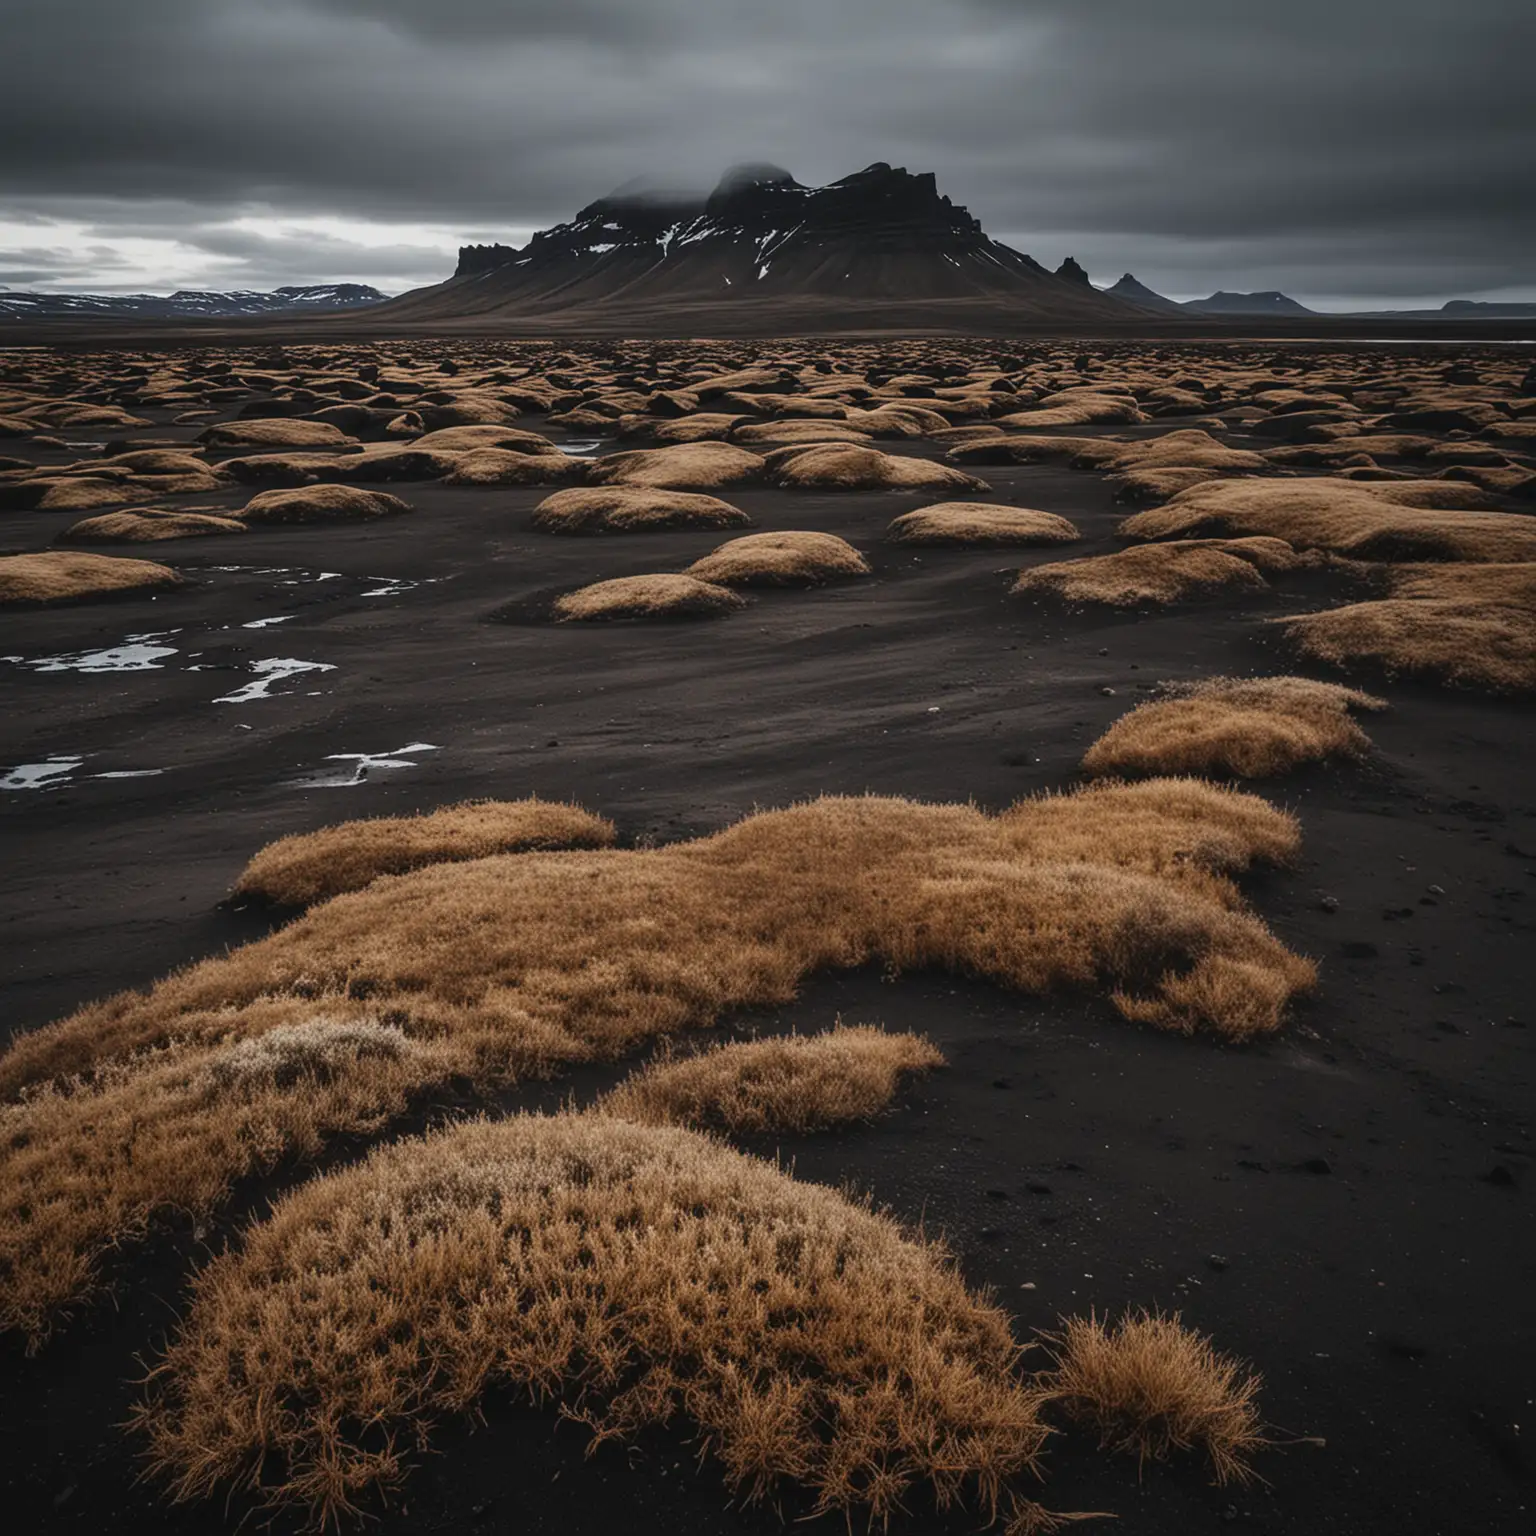 Scenic-Iceland-Black-Desert-Landscape-with-Dramatic-Sky